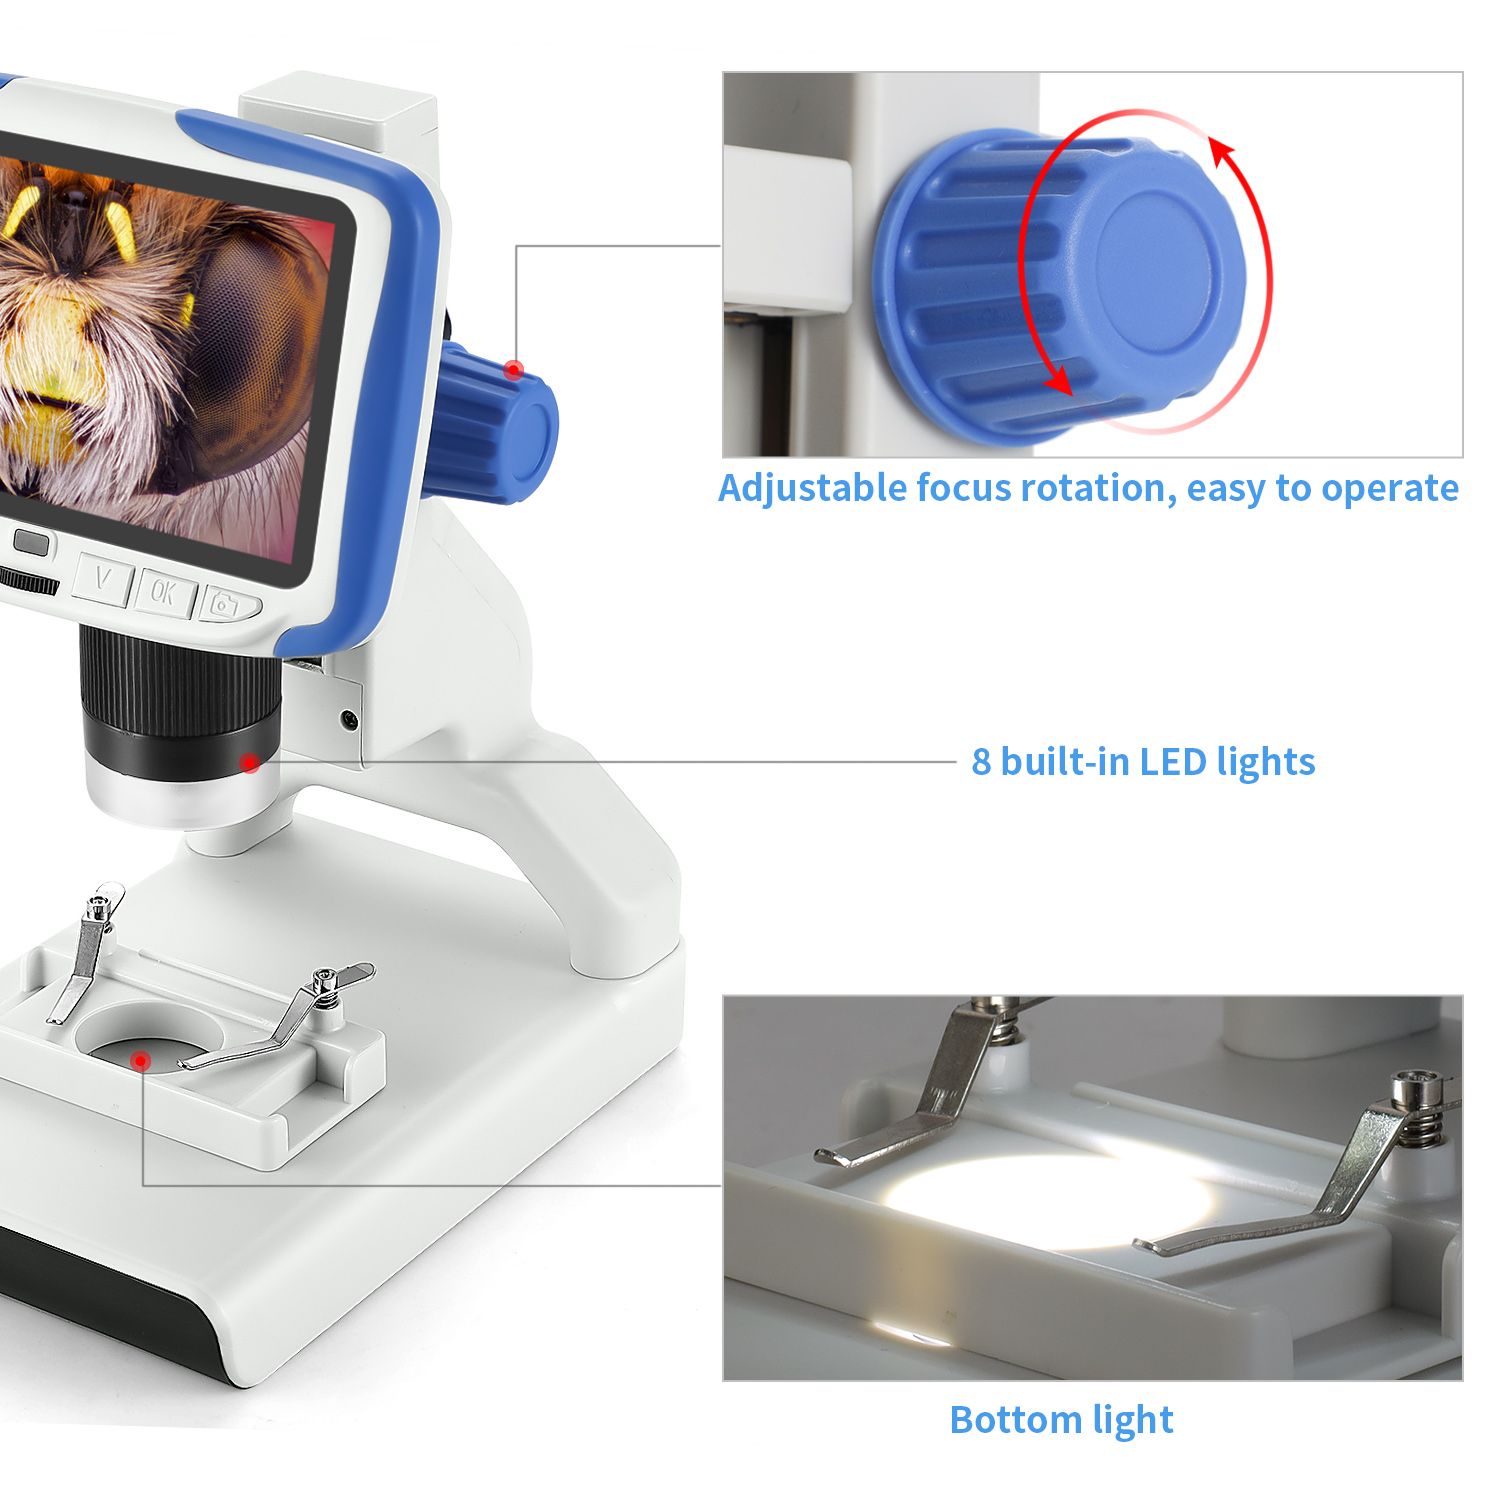 Andonstar-AD205--5-Inch-1080P-Digital-Microscope-With-HD-Sensor-USB-Microscope-For-Phone-Repair-Sold-1612990